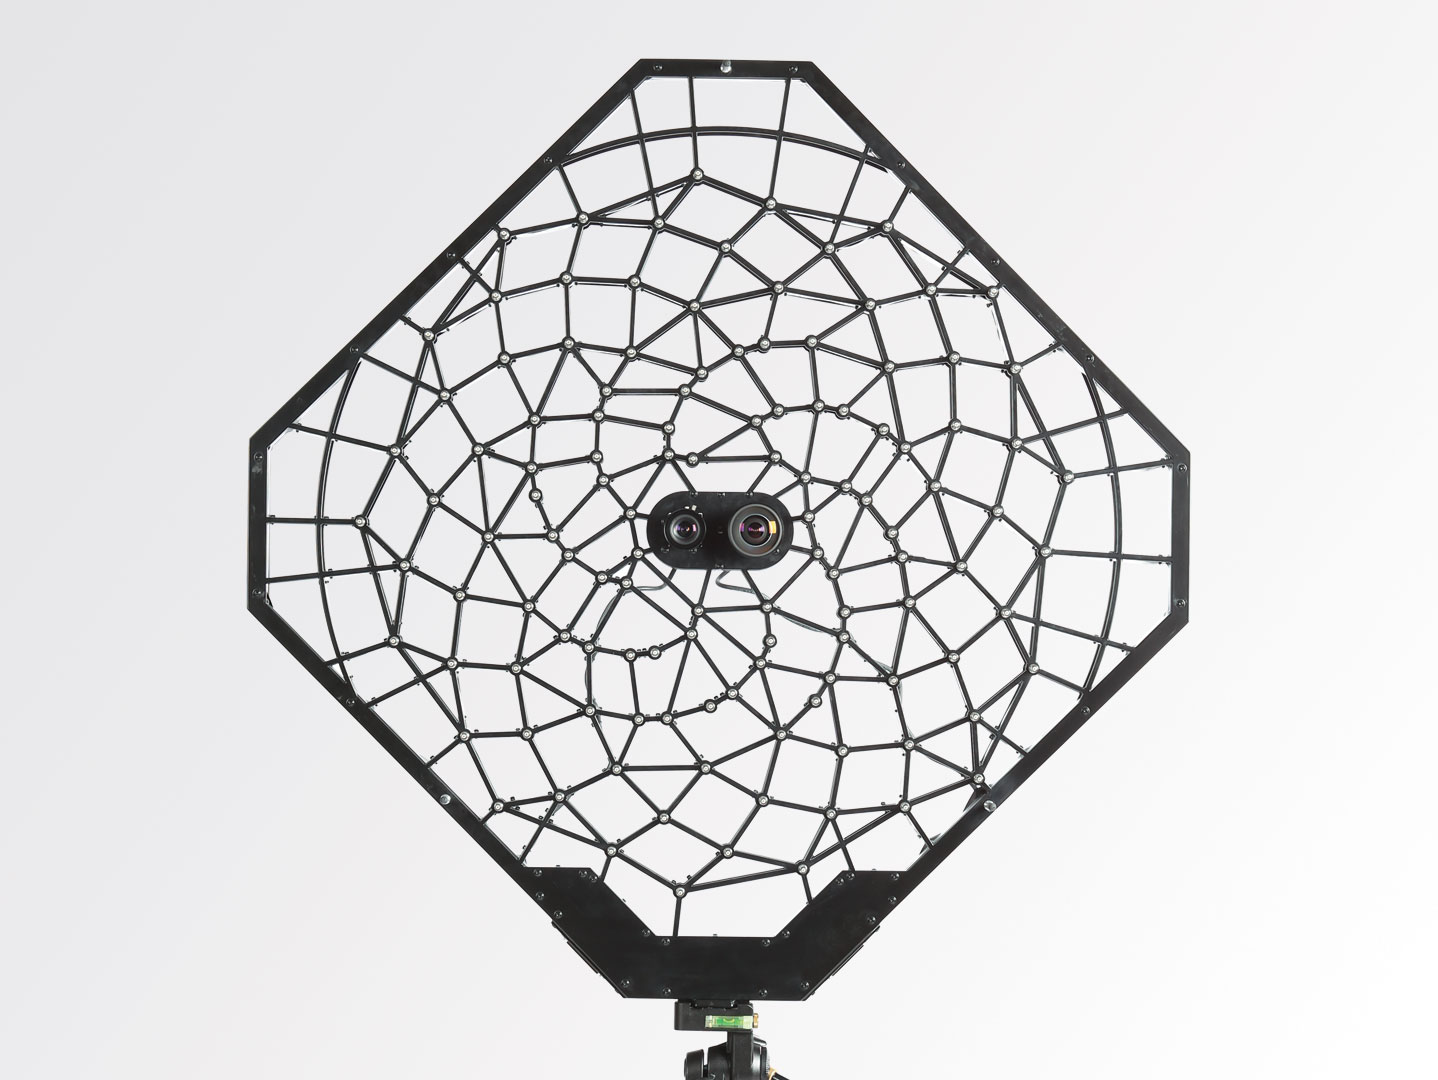 Fibonacci AC Pro microphone array with two Baumer VLG-22C cameras